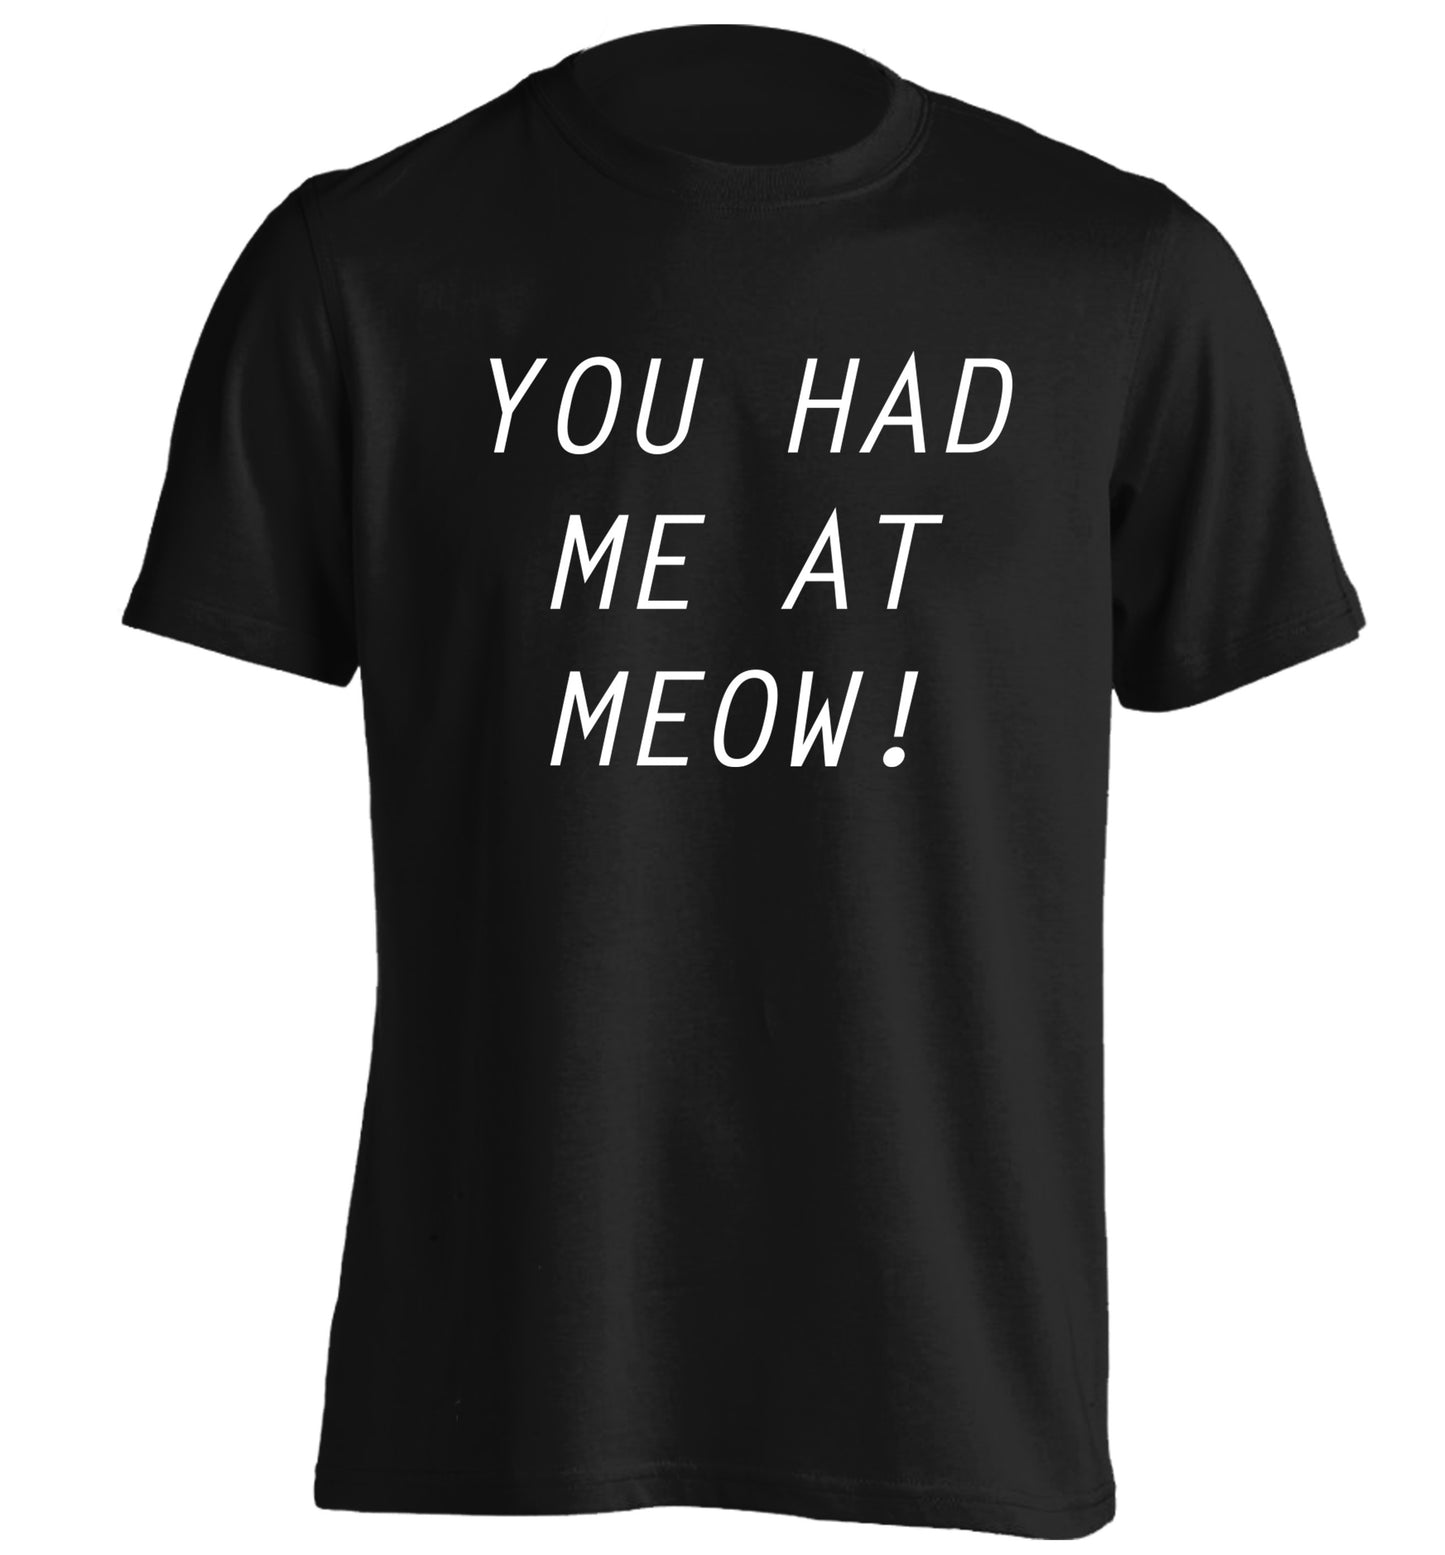 You had me at meow adults unisex black Tshirt 2XL